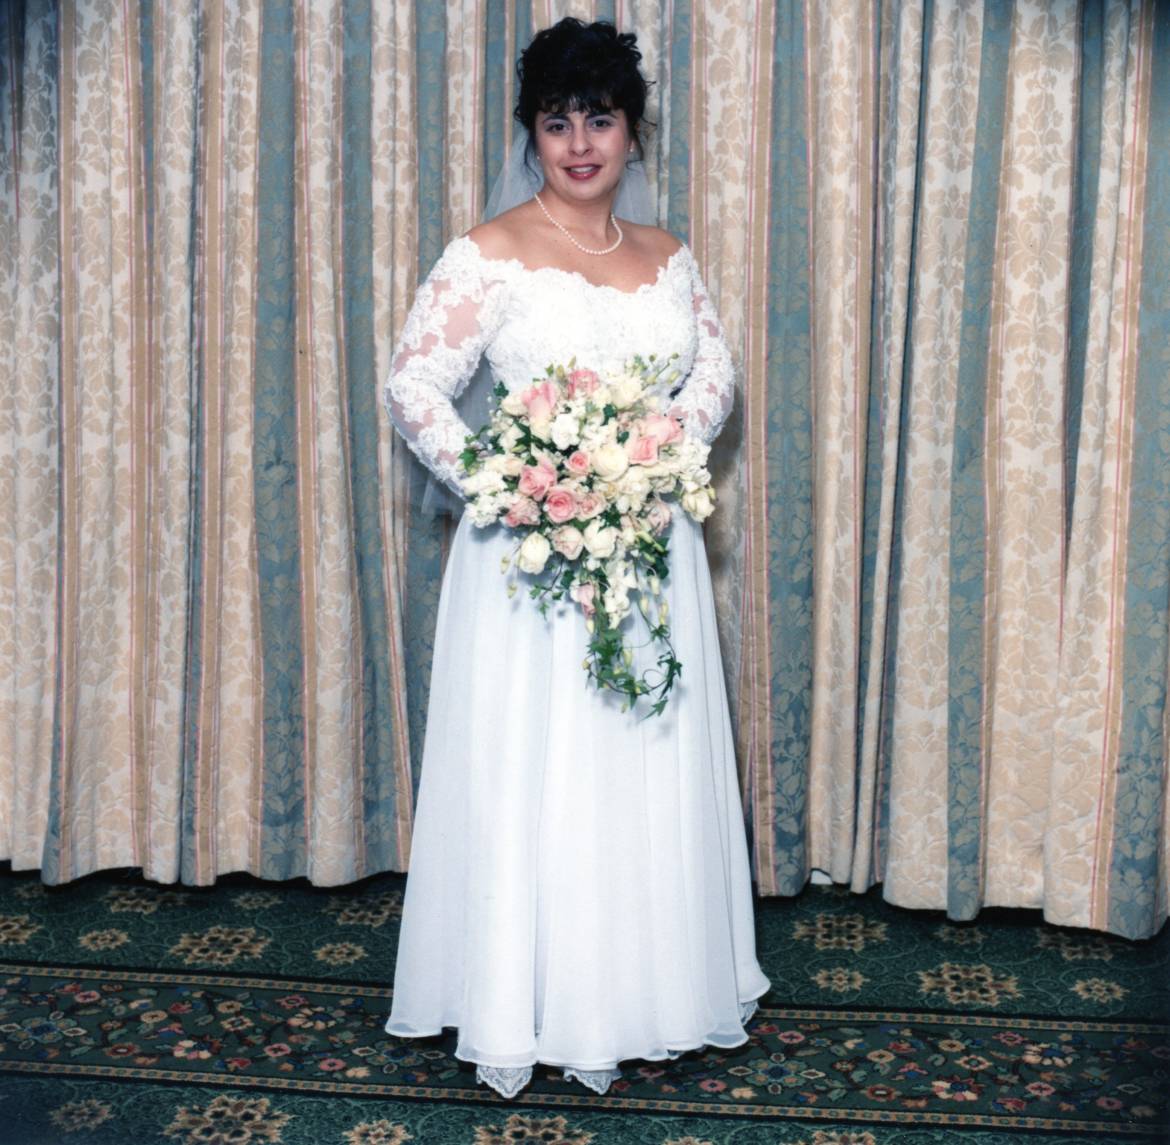 Bride-picture642-2.jpg